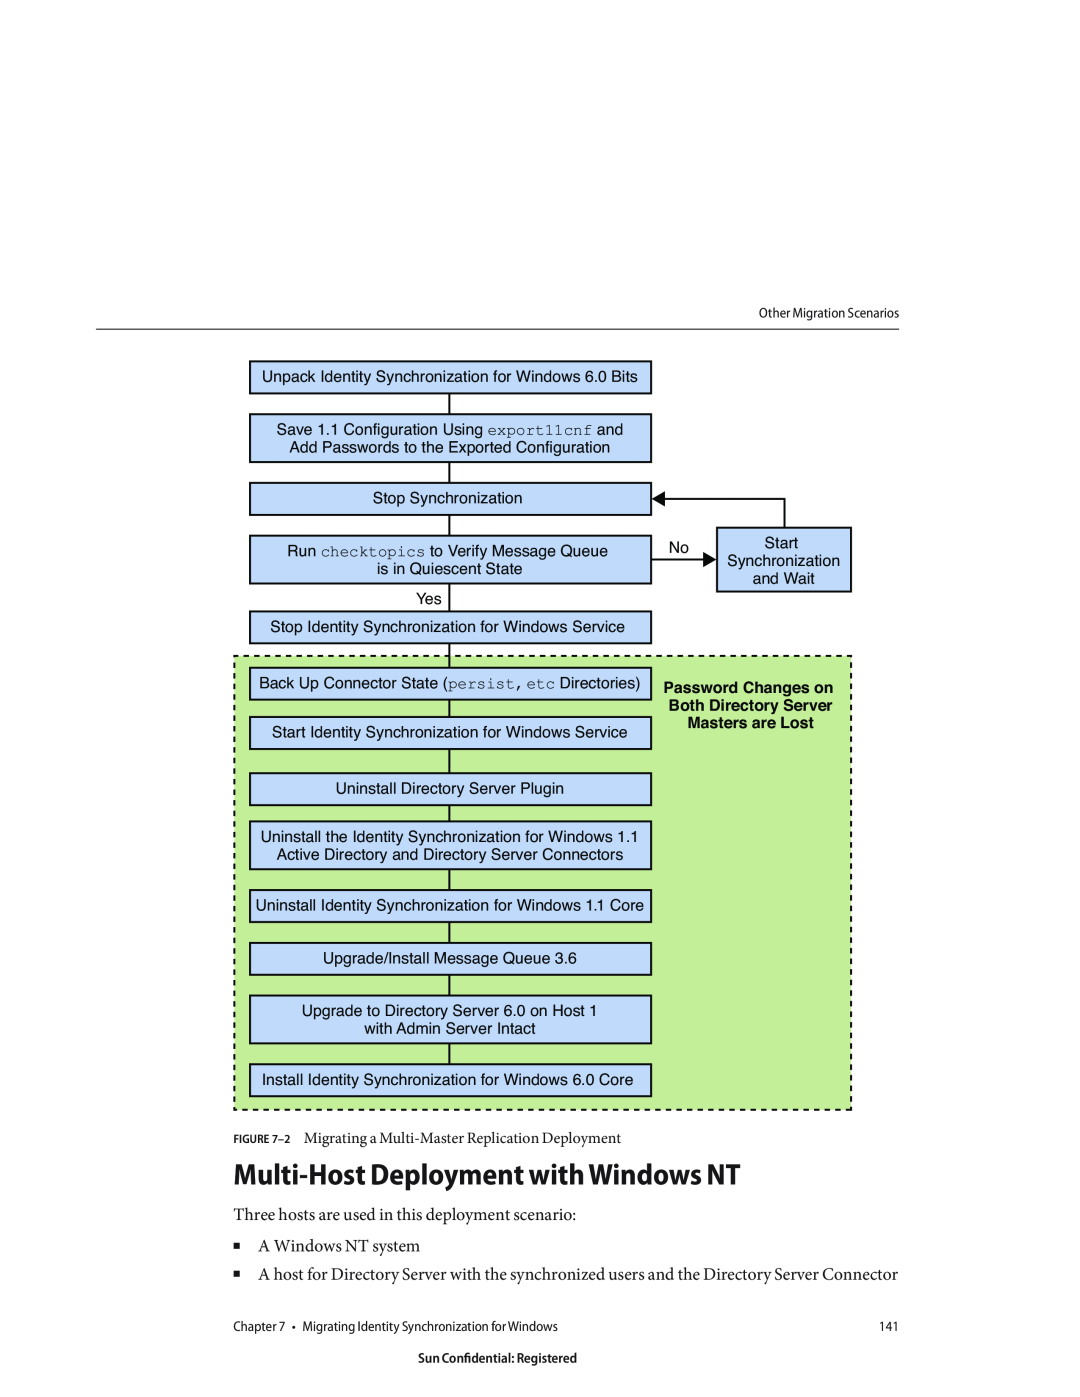 Sun Microsystems 8190994 manual Multi-Host Deployment with Windows NT 